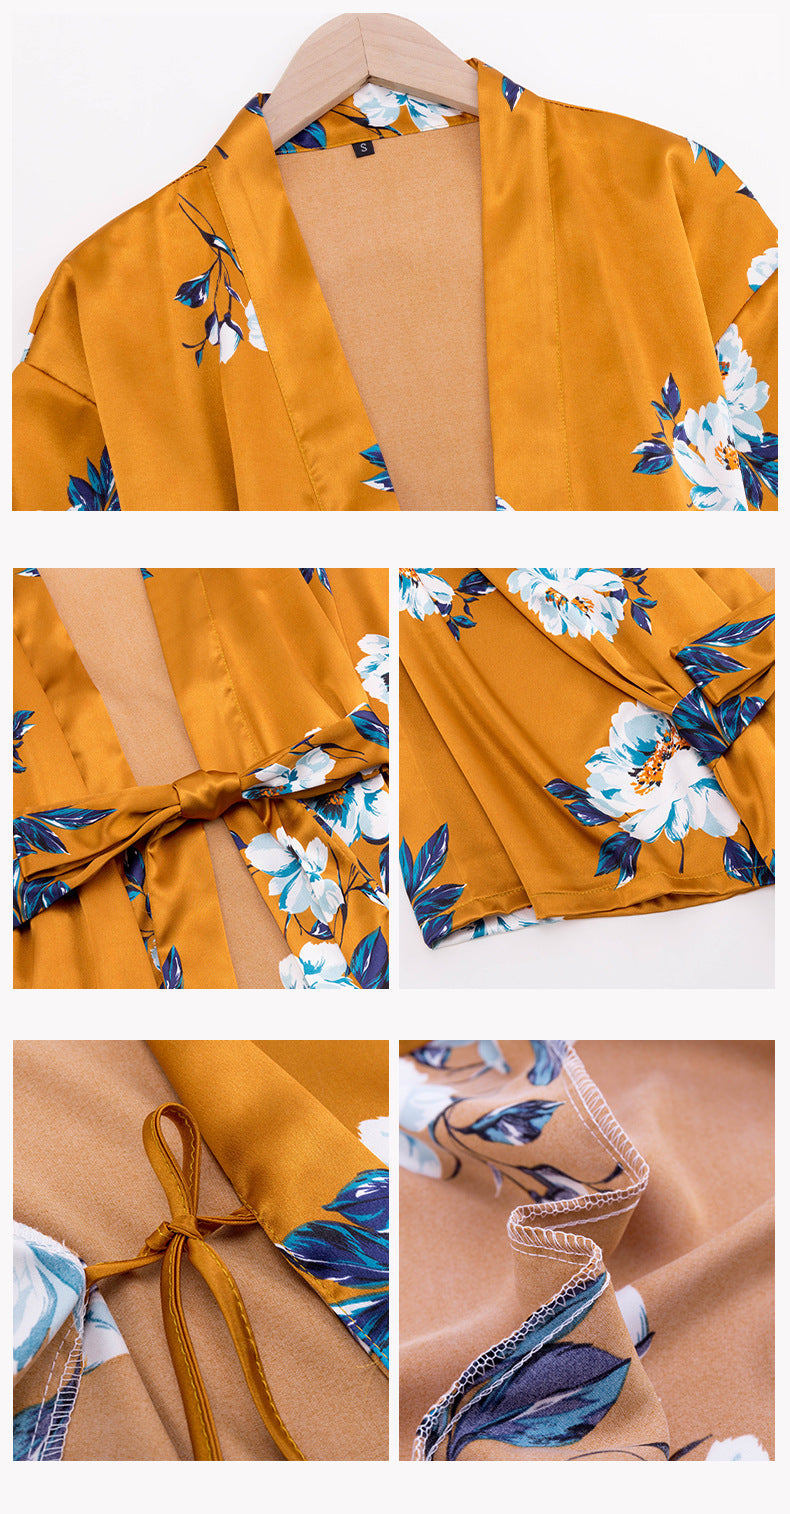 Women Dark Yellow Floral Print Silk Pajamas Suspender Dress Nightgown 2-Piece Set 2119